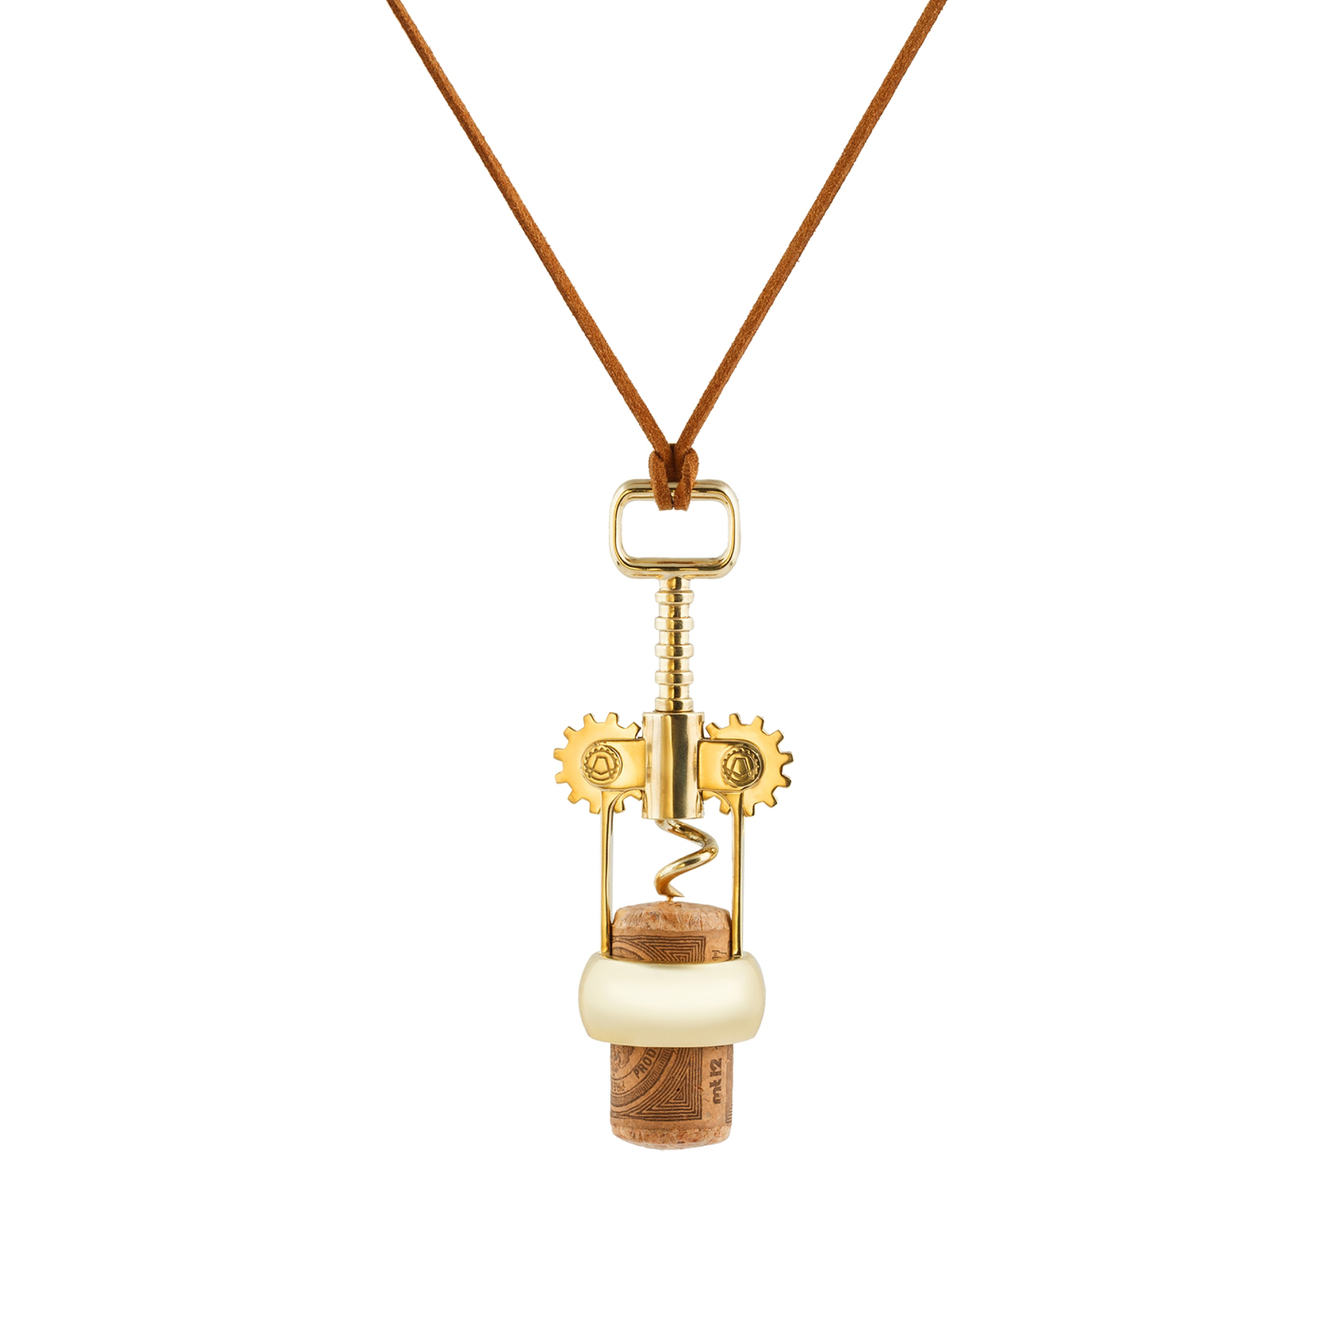 AMARIN Jewelry Позолоченная подвеска CORK Штопор amarin jewelry позолоченное кольцо cork из бронзы бутылка